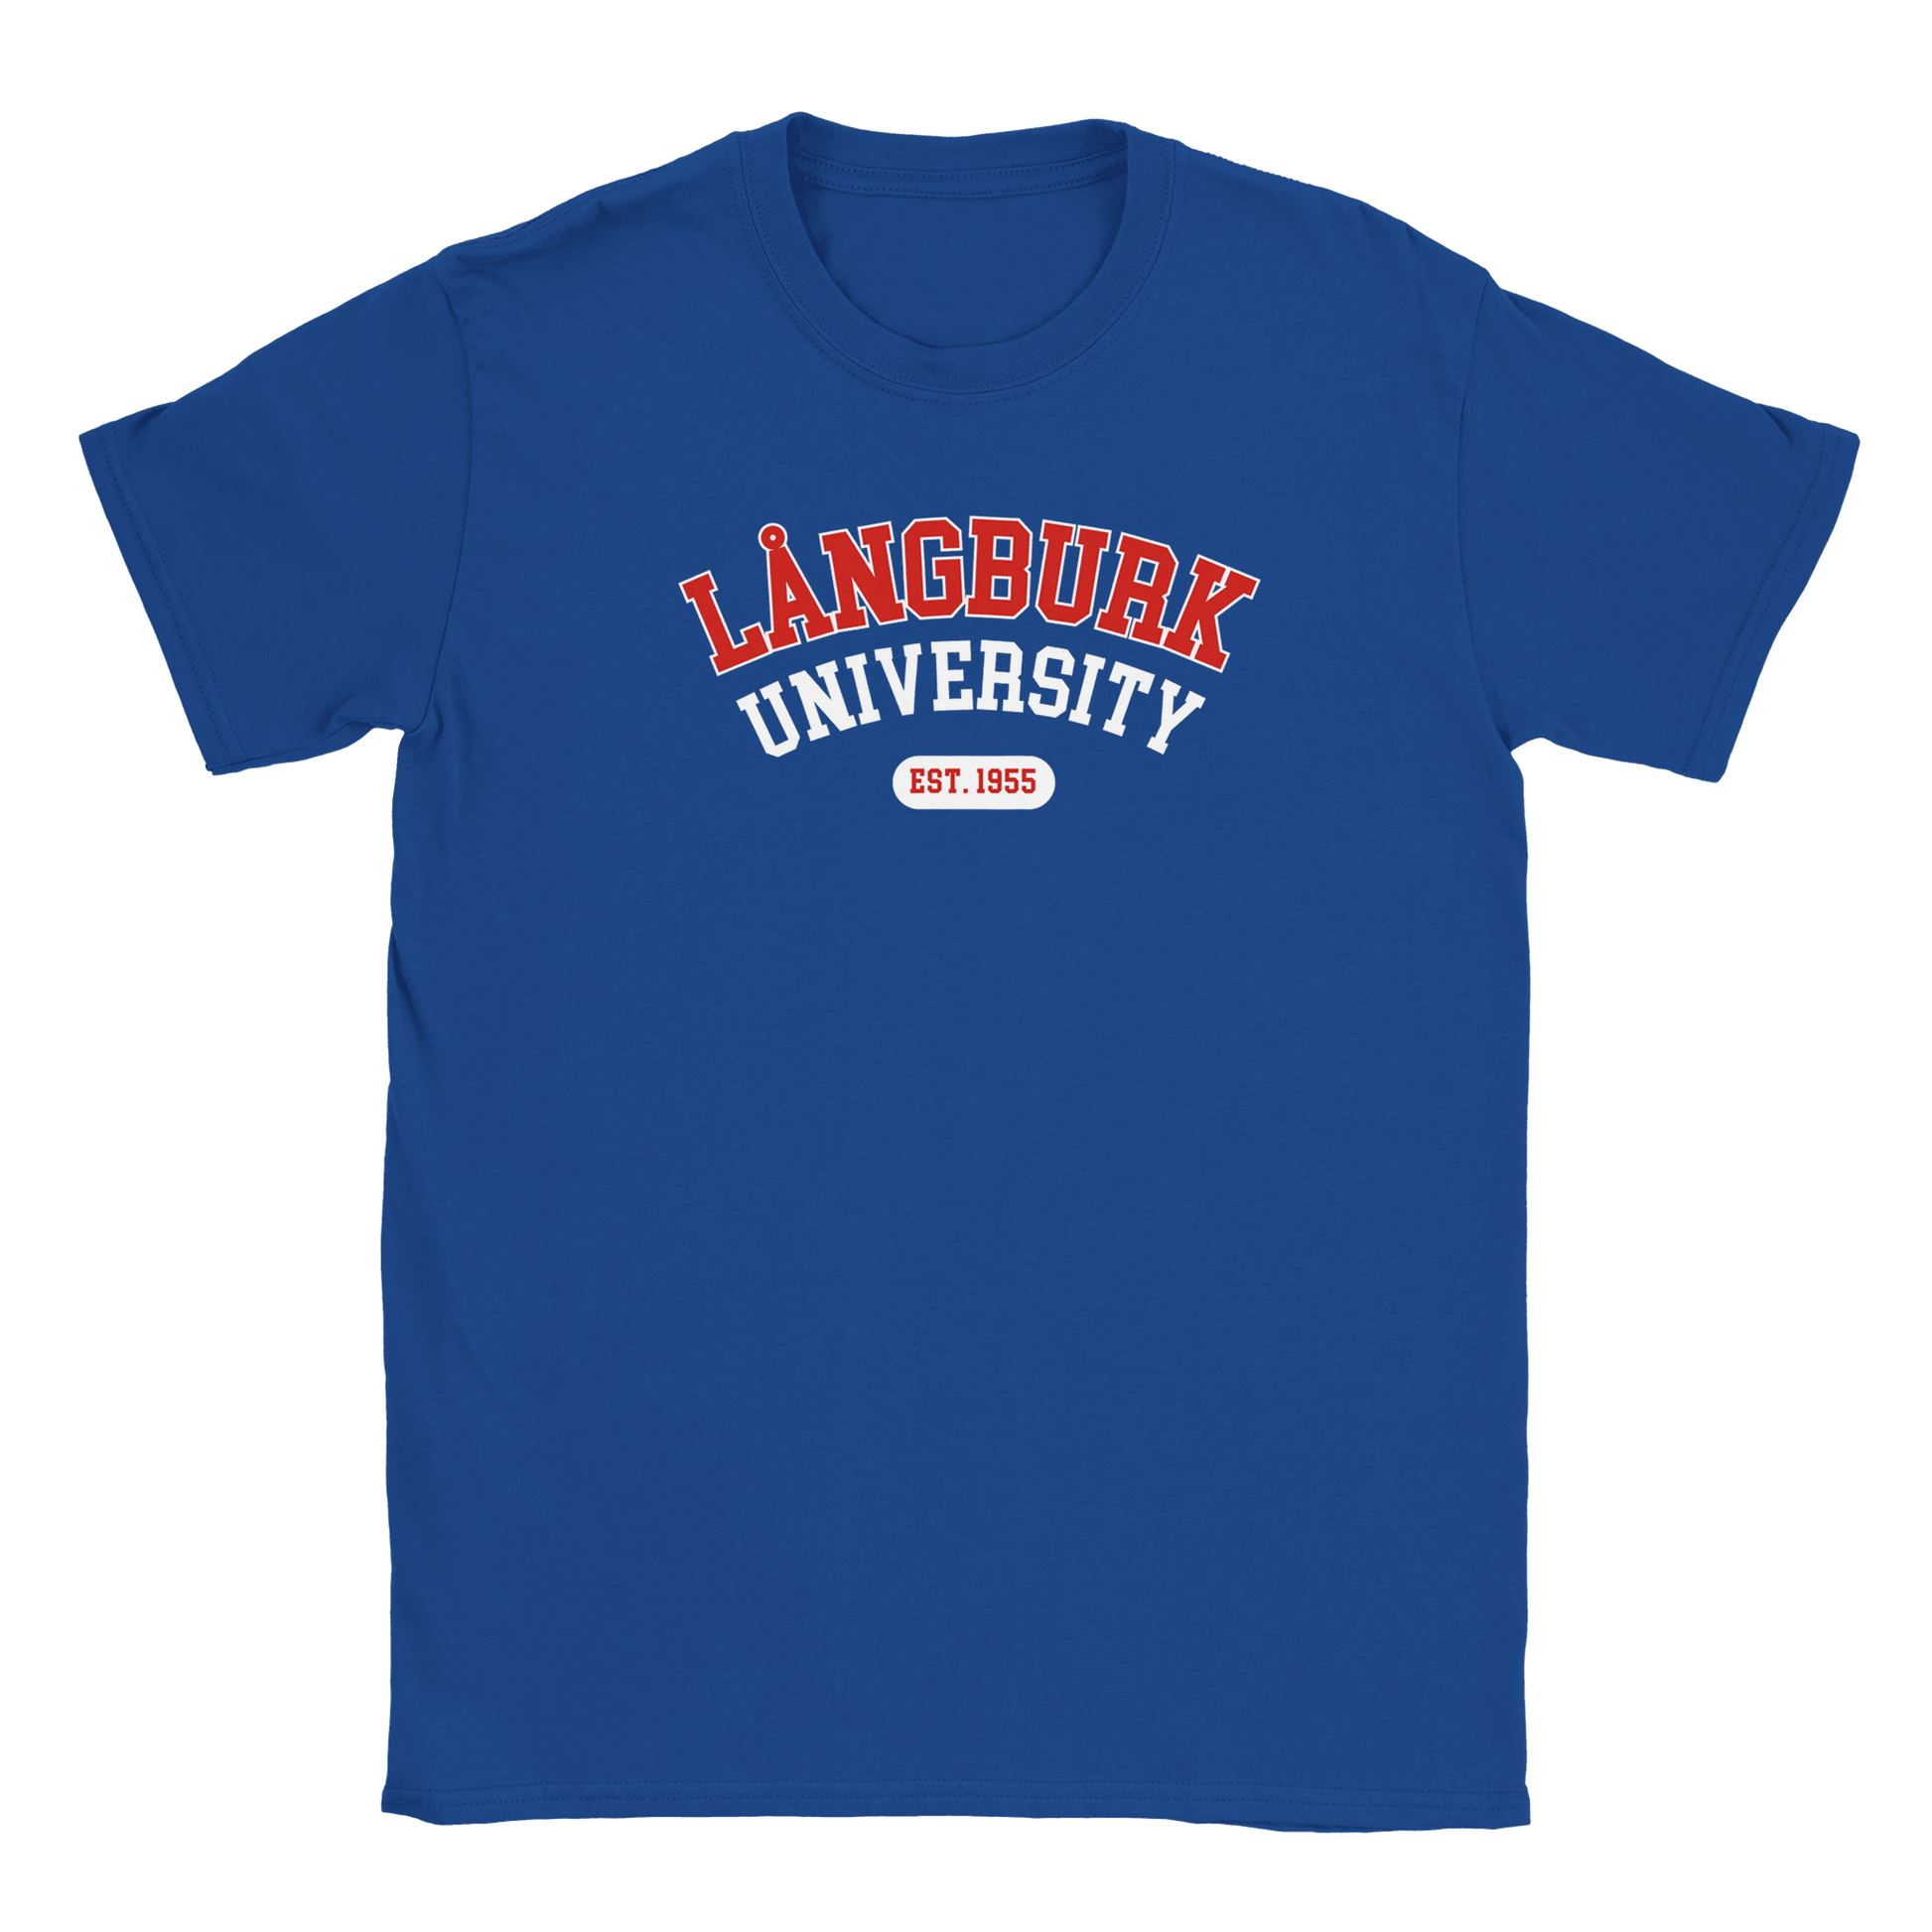 Långburk University Est. 1955 - T-shirt Blå